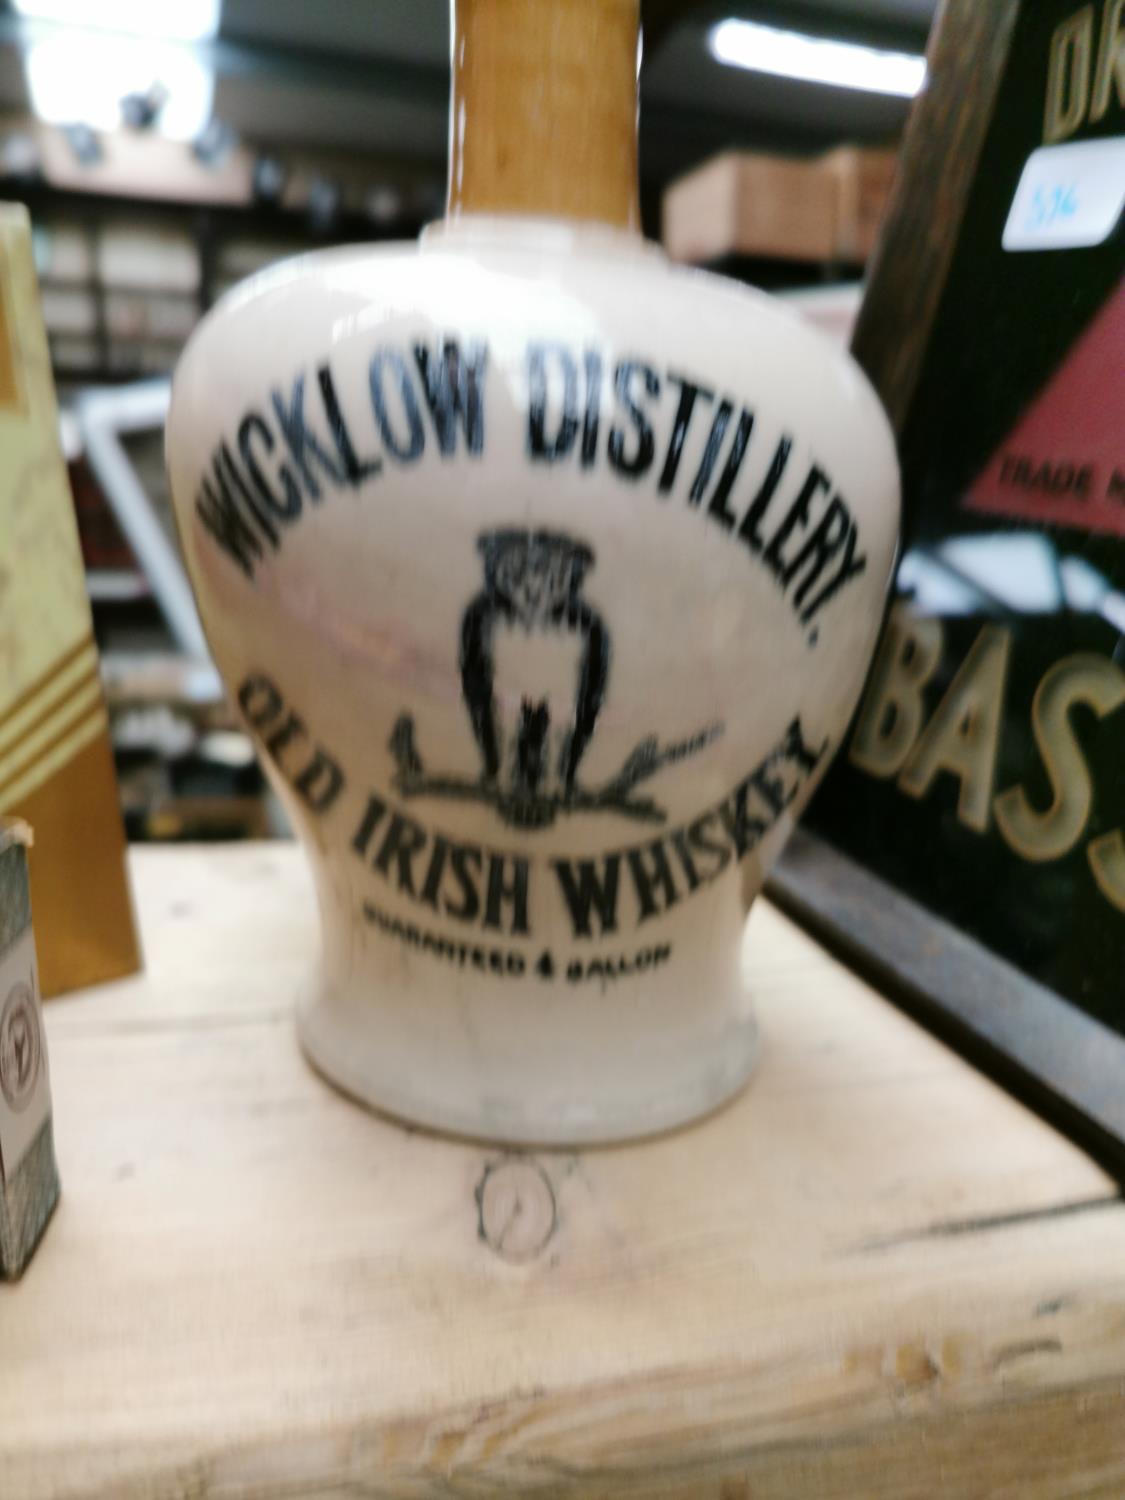 Wicklow Distillery Old Irish Whiskey flagon.